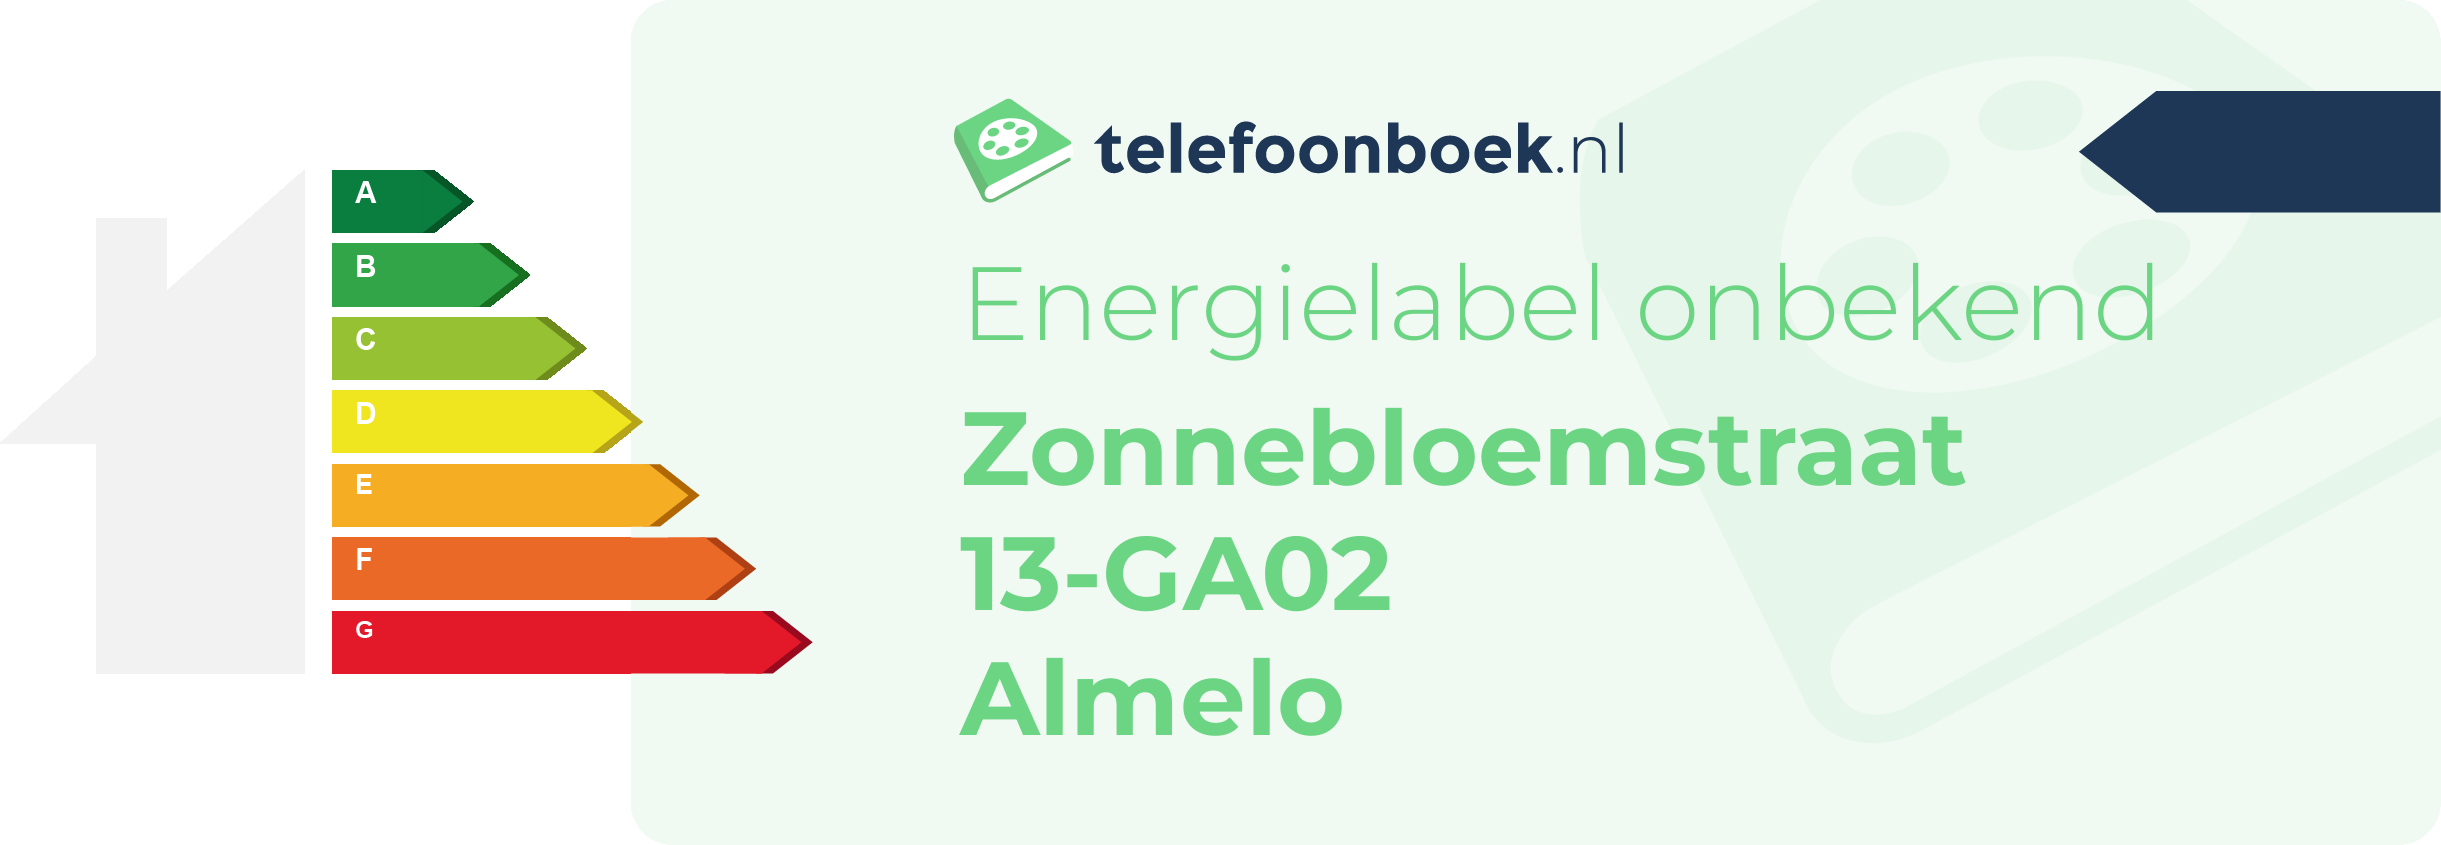 Energielabel Zonnebloemstraat 13-GA02 Almelo